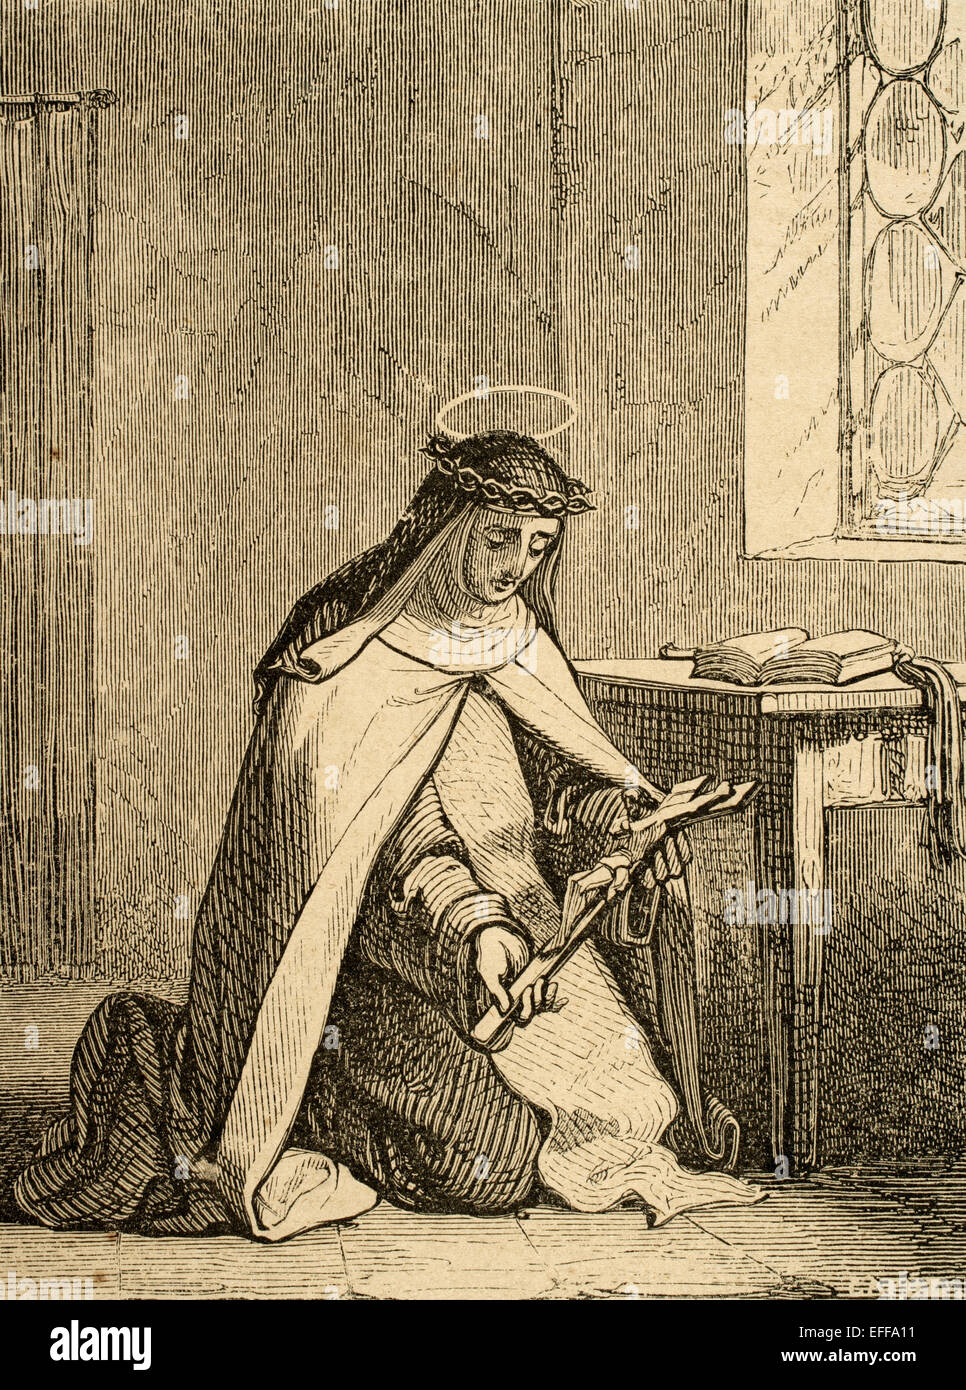 Saint Mary Magdalene of Pazzi (1566-1607). Italian Carmelite mystic and saint. Engraving by Capuz, 1852. Stock Photo